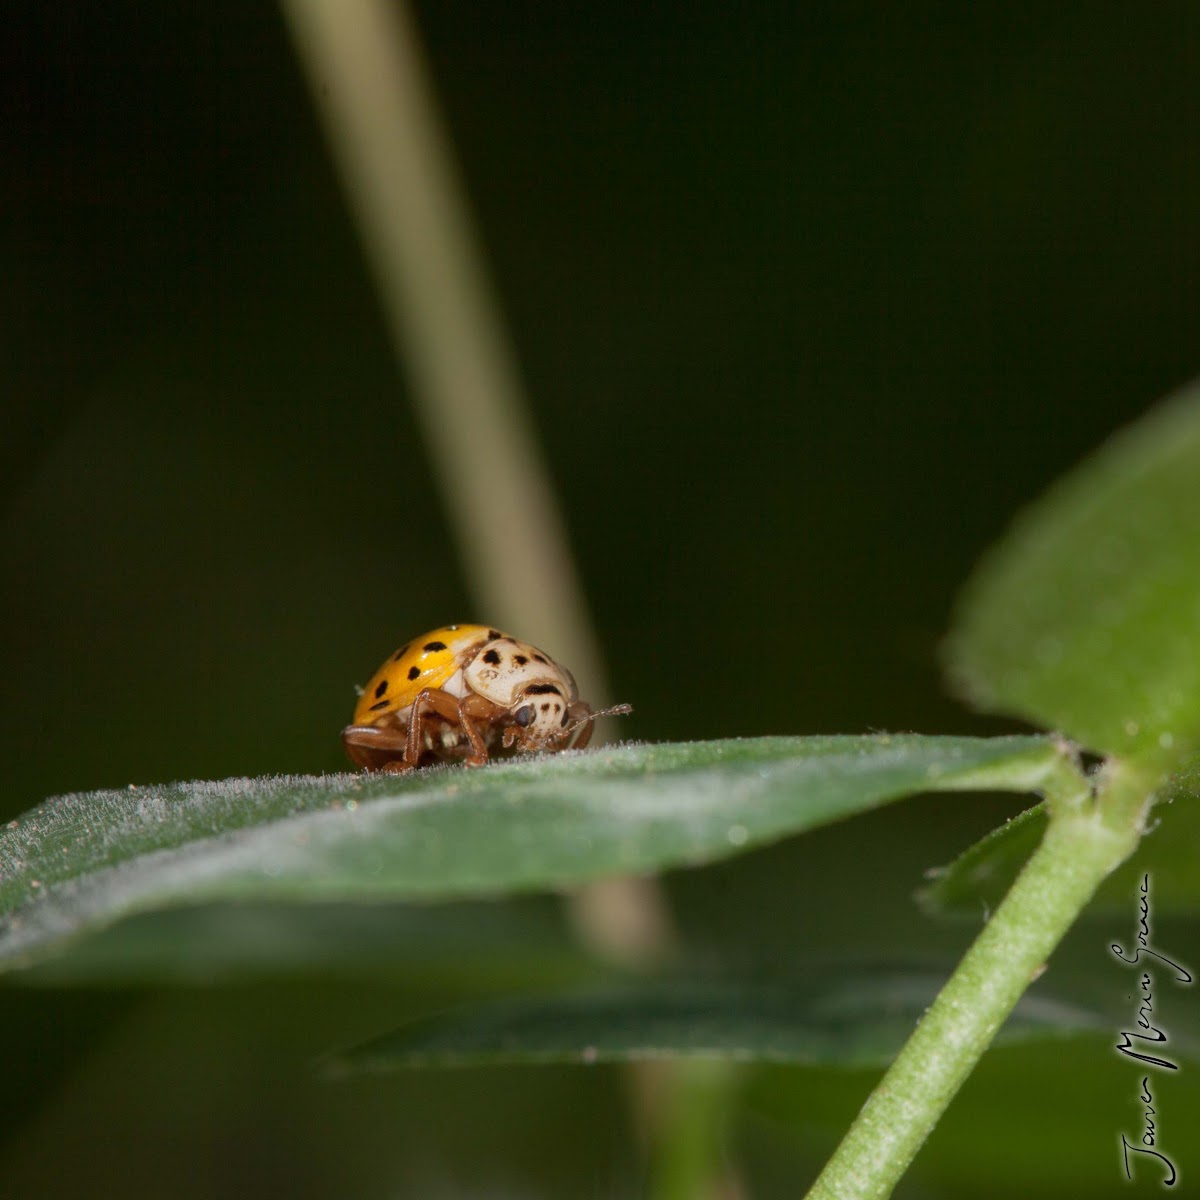 22-dot Ladybug